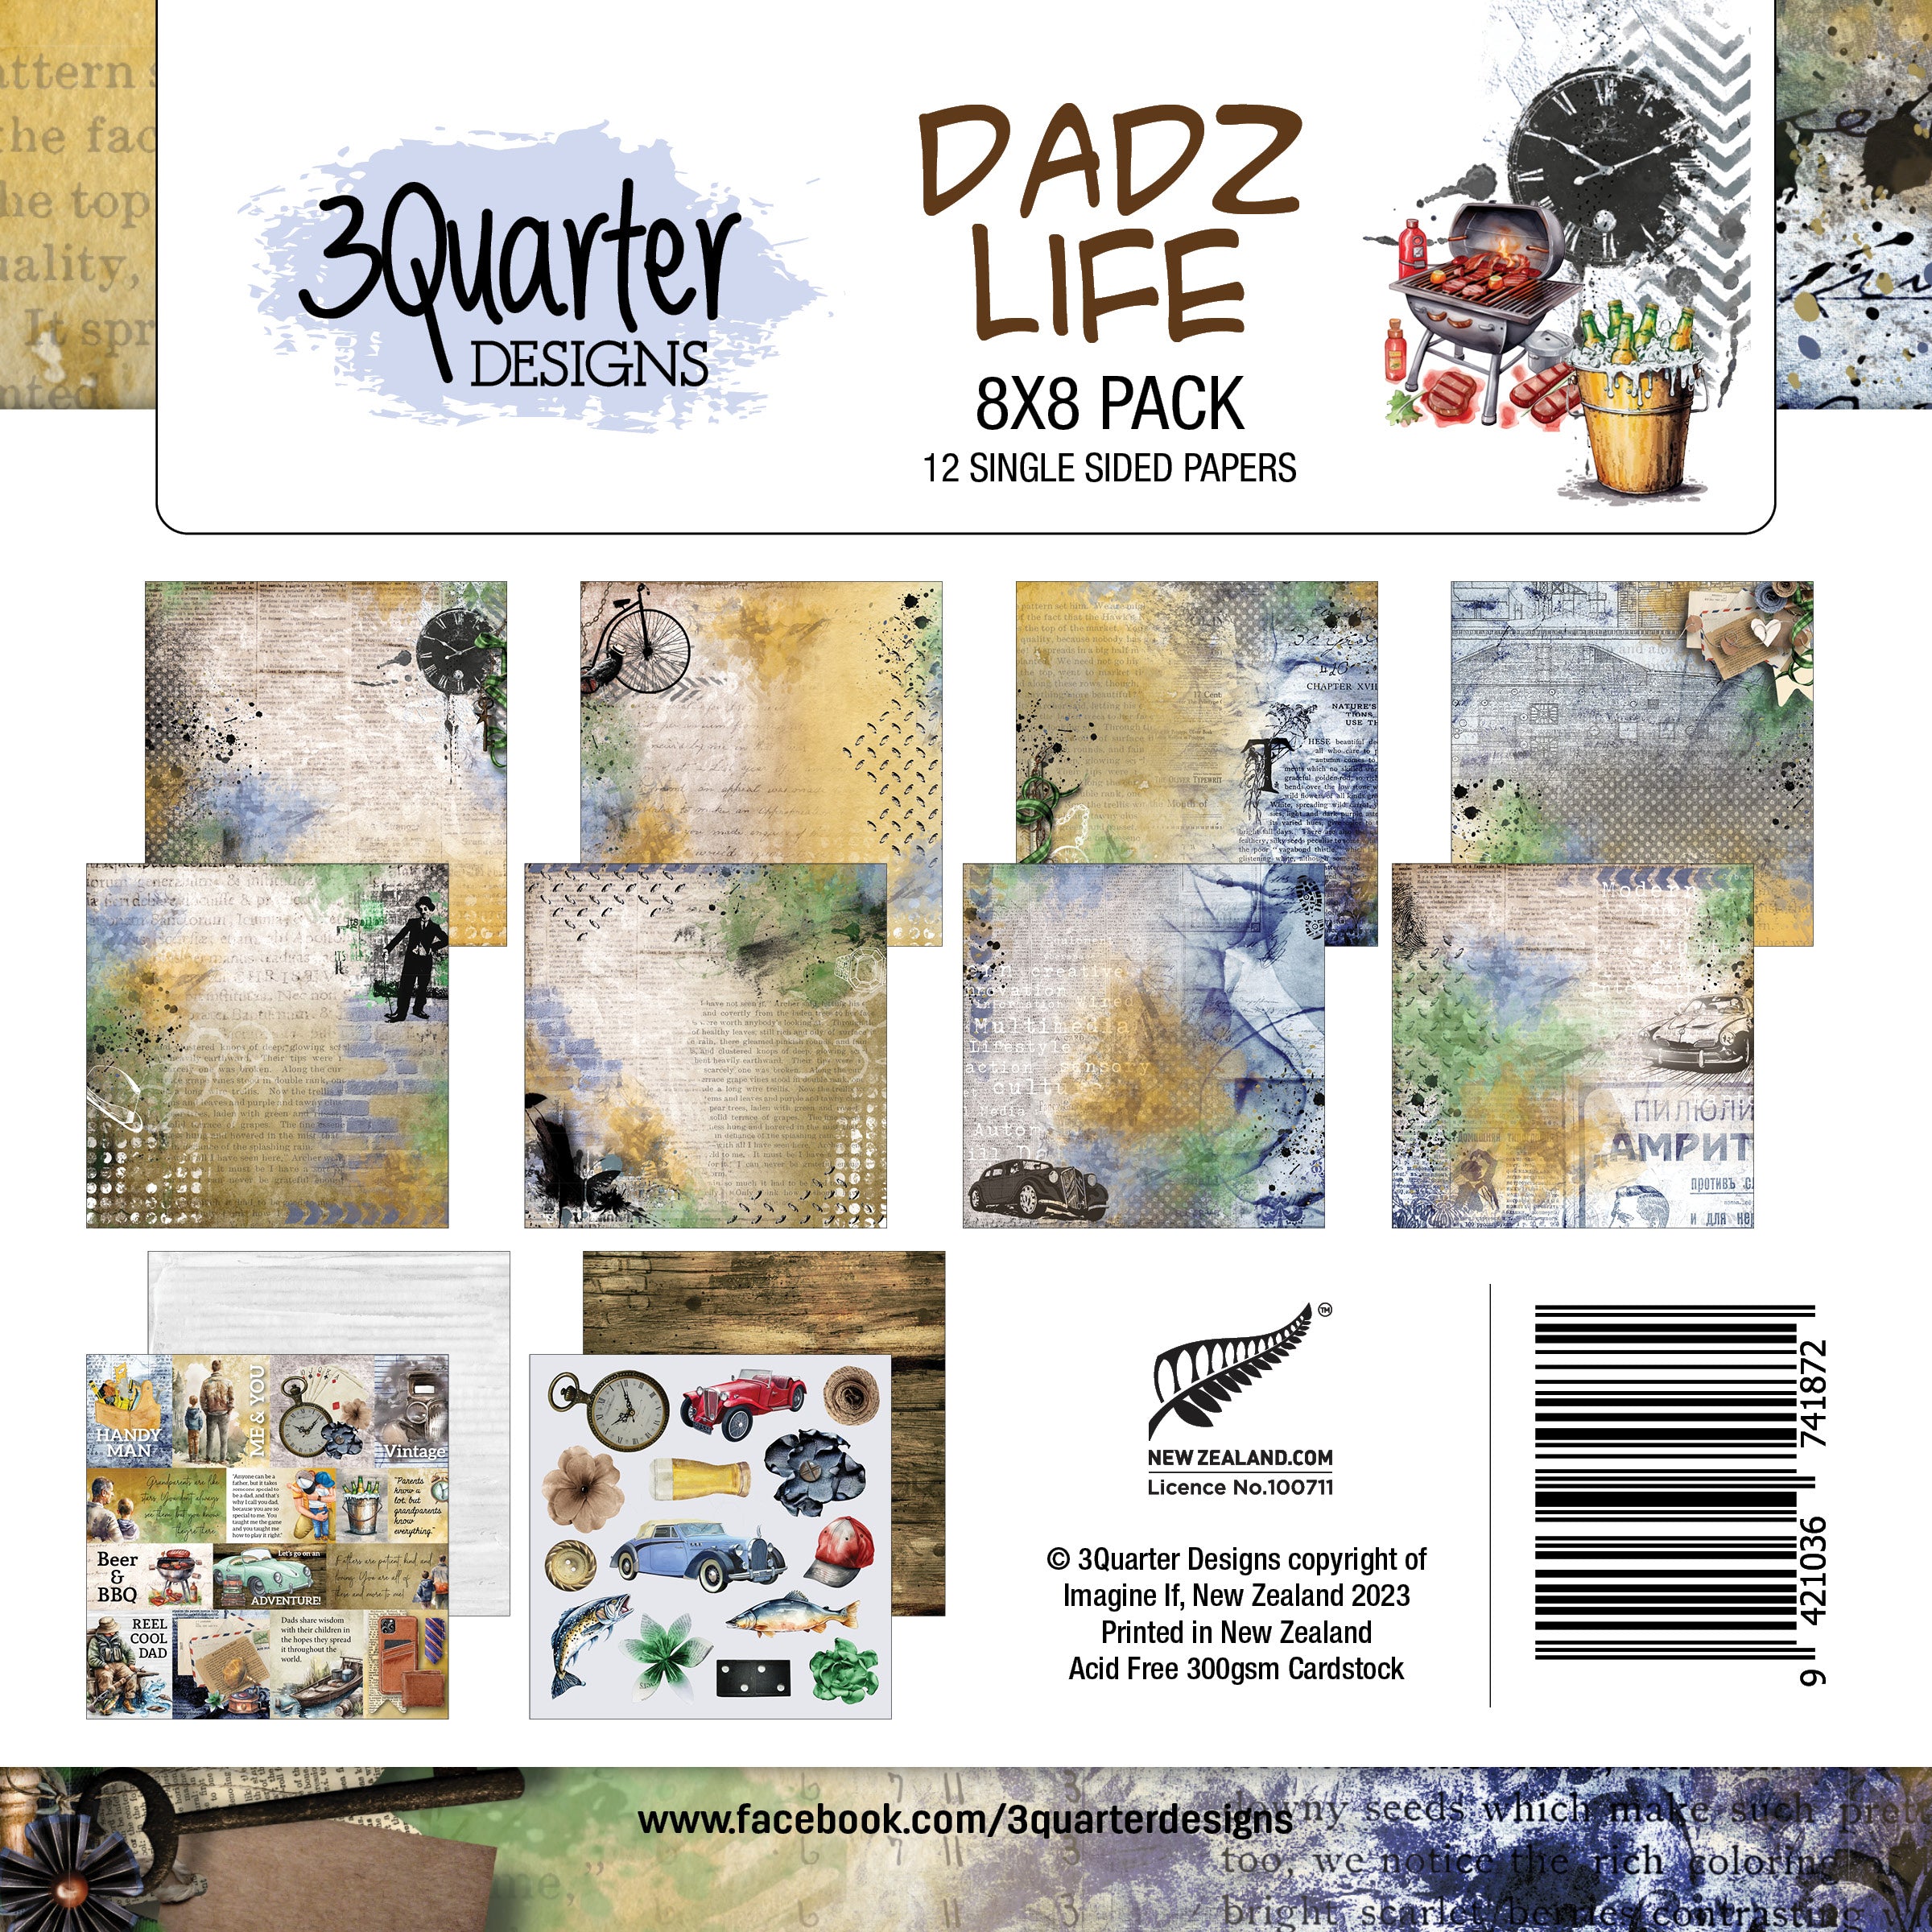 Dadz Life 8x8 Pack